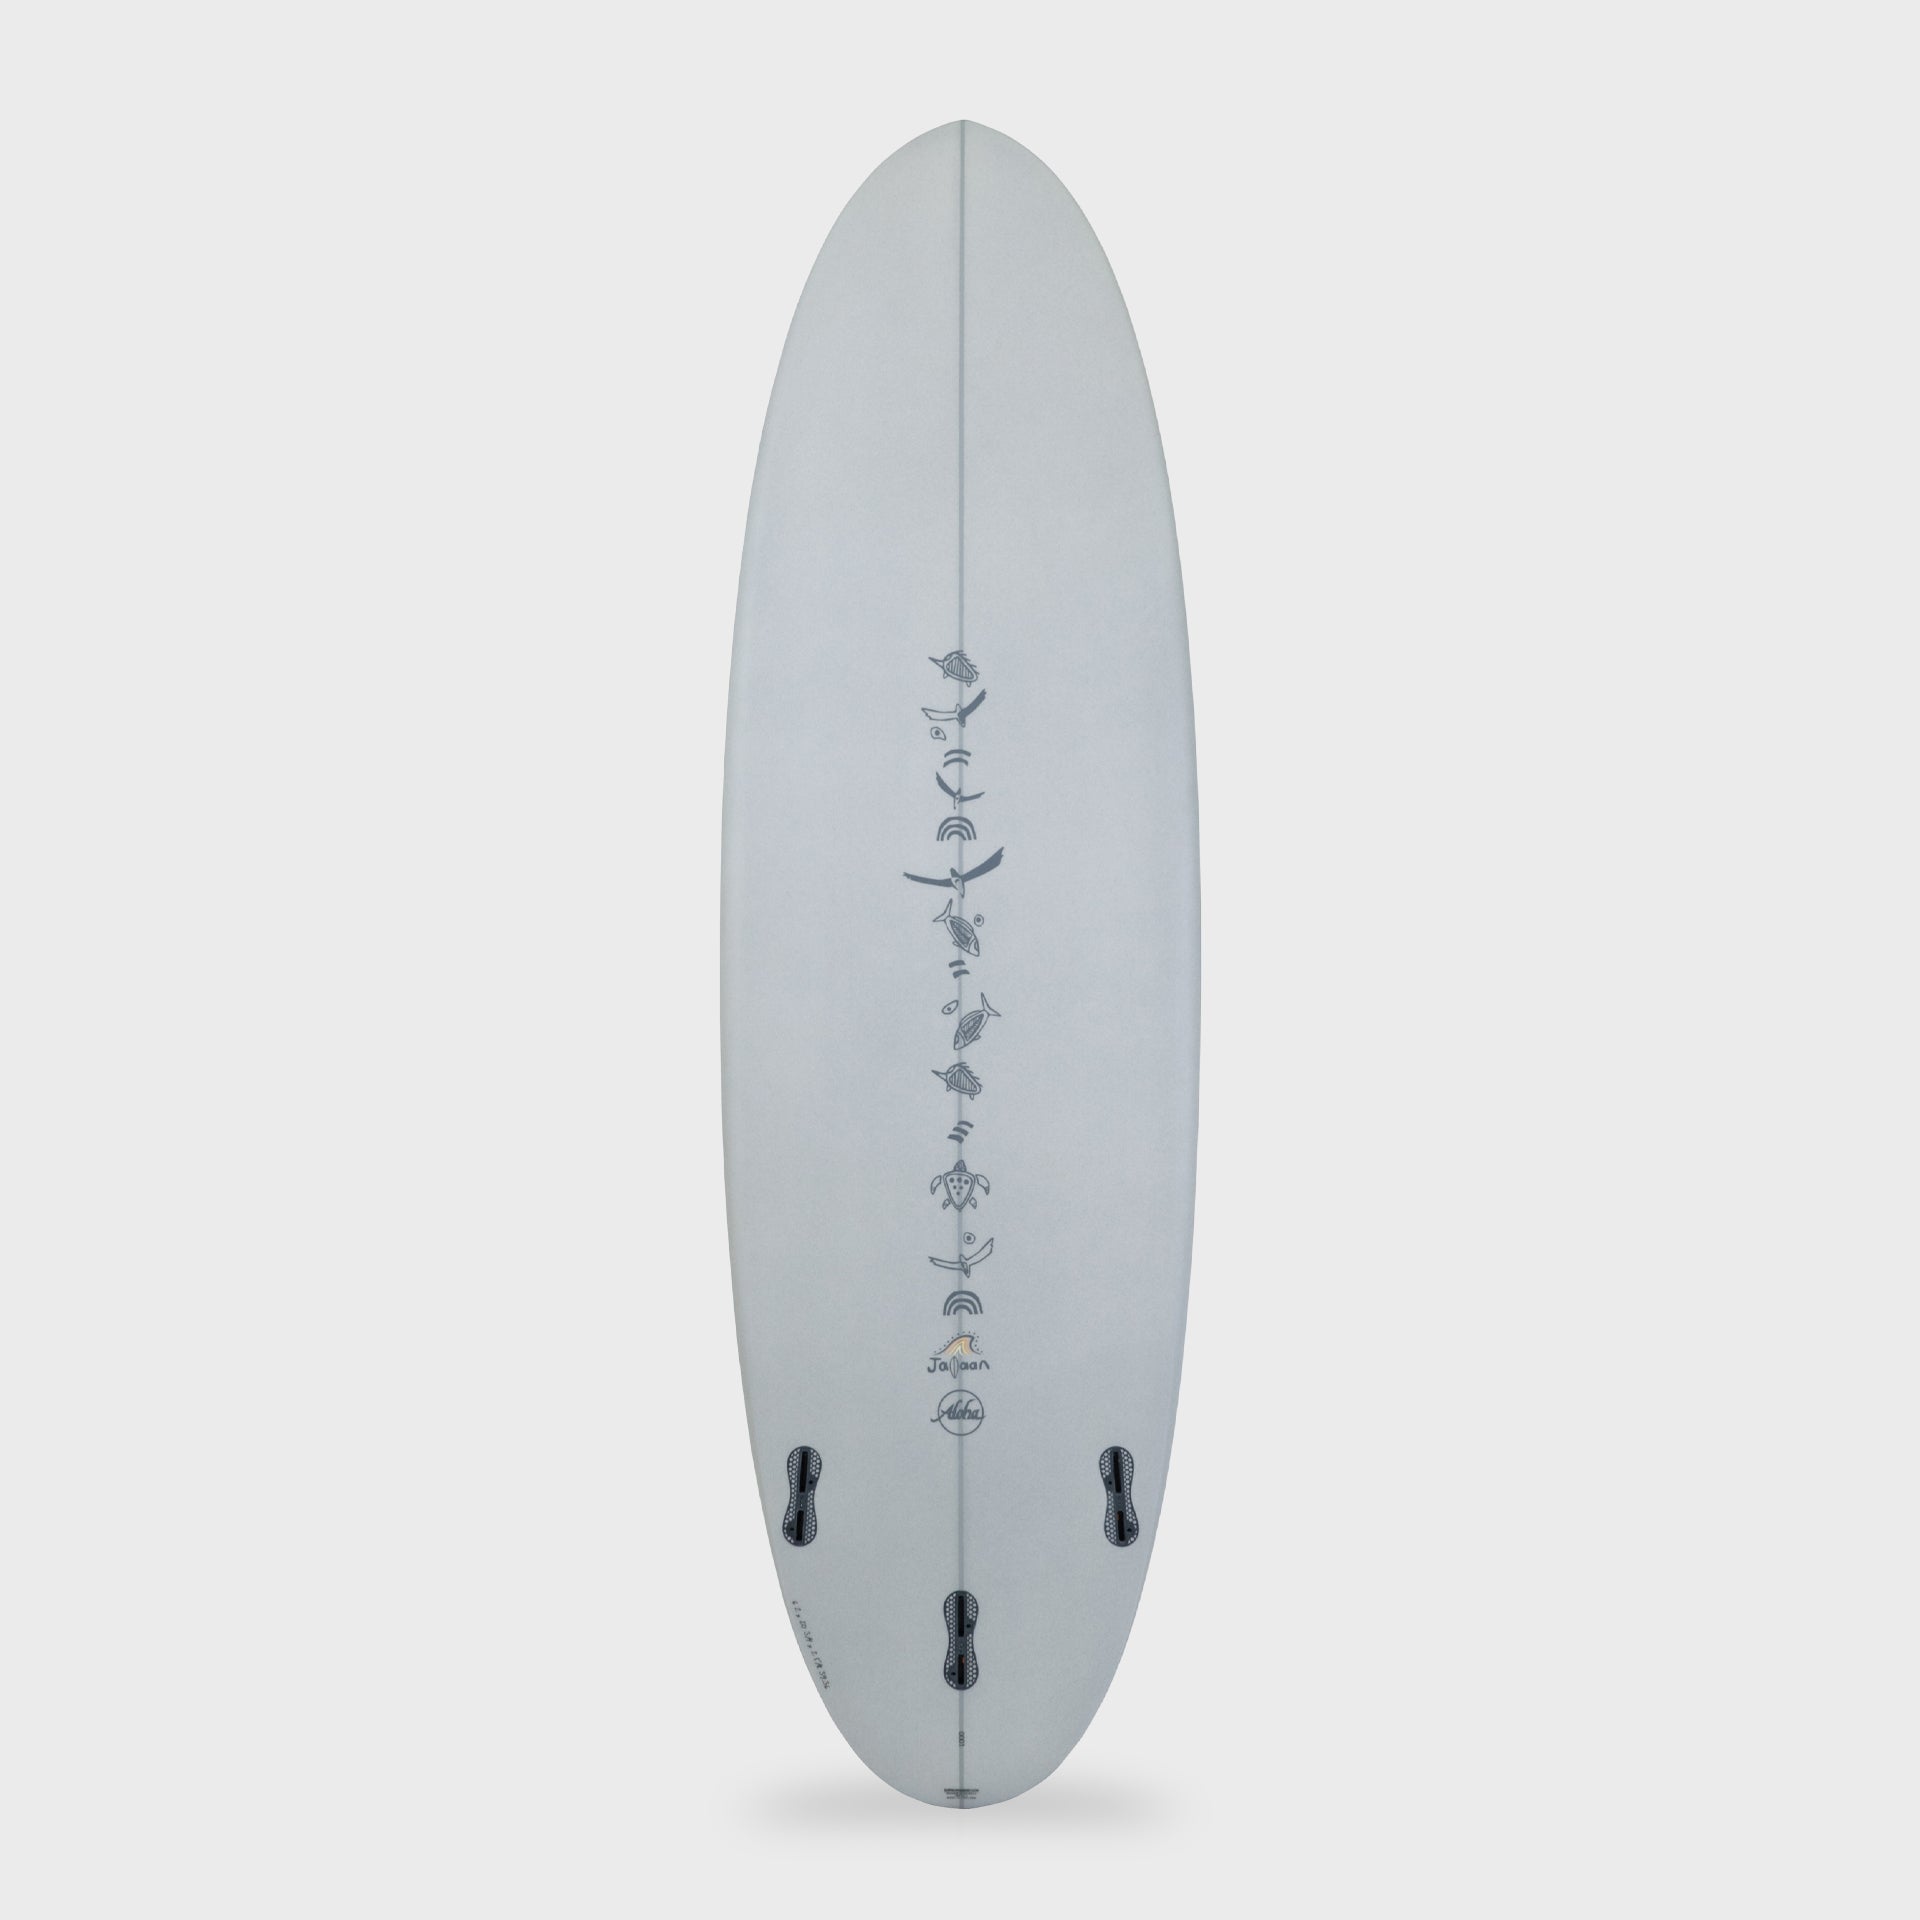 Jalaan Peanut PU Shortboard - 6'0 and 6'6 - Ash Grey - FCS II - ManGo Surfing